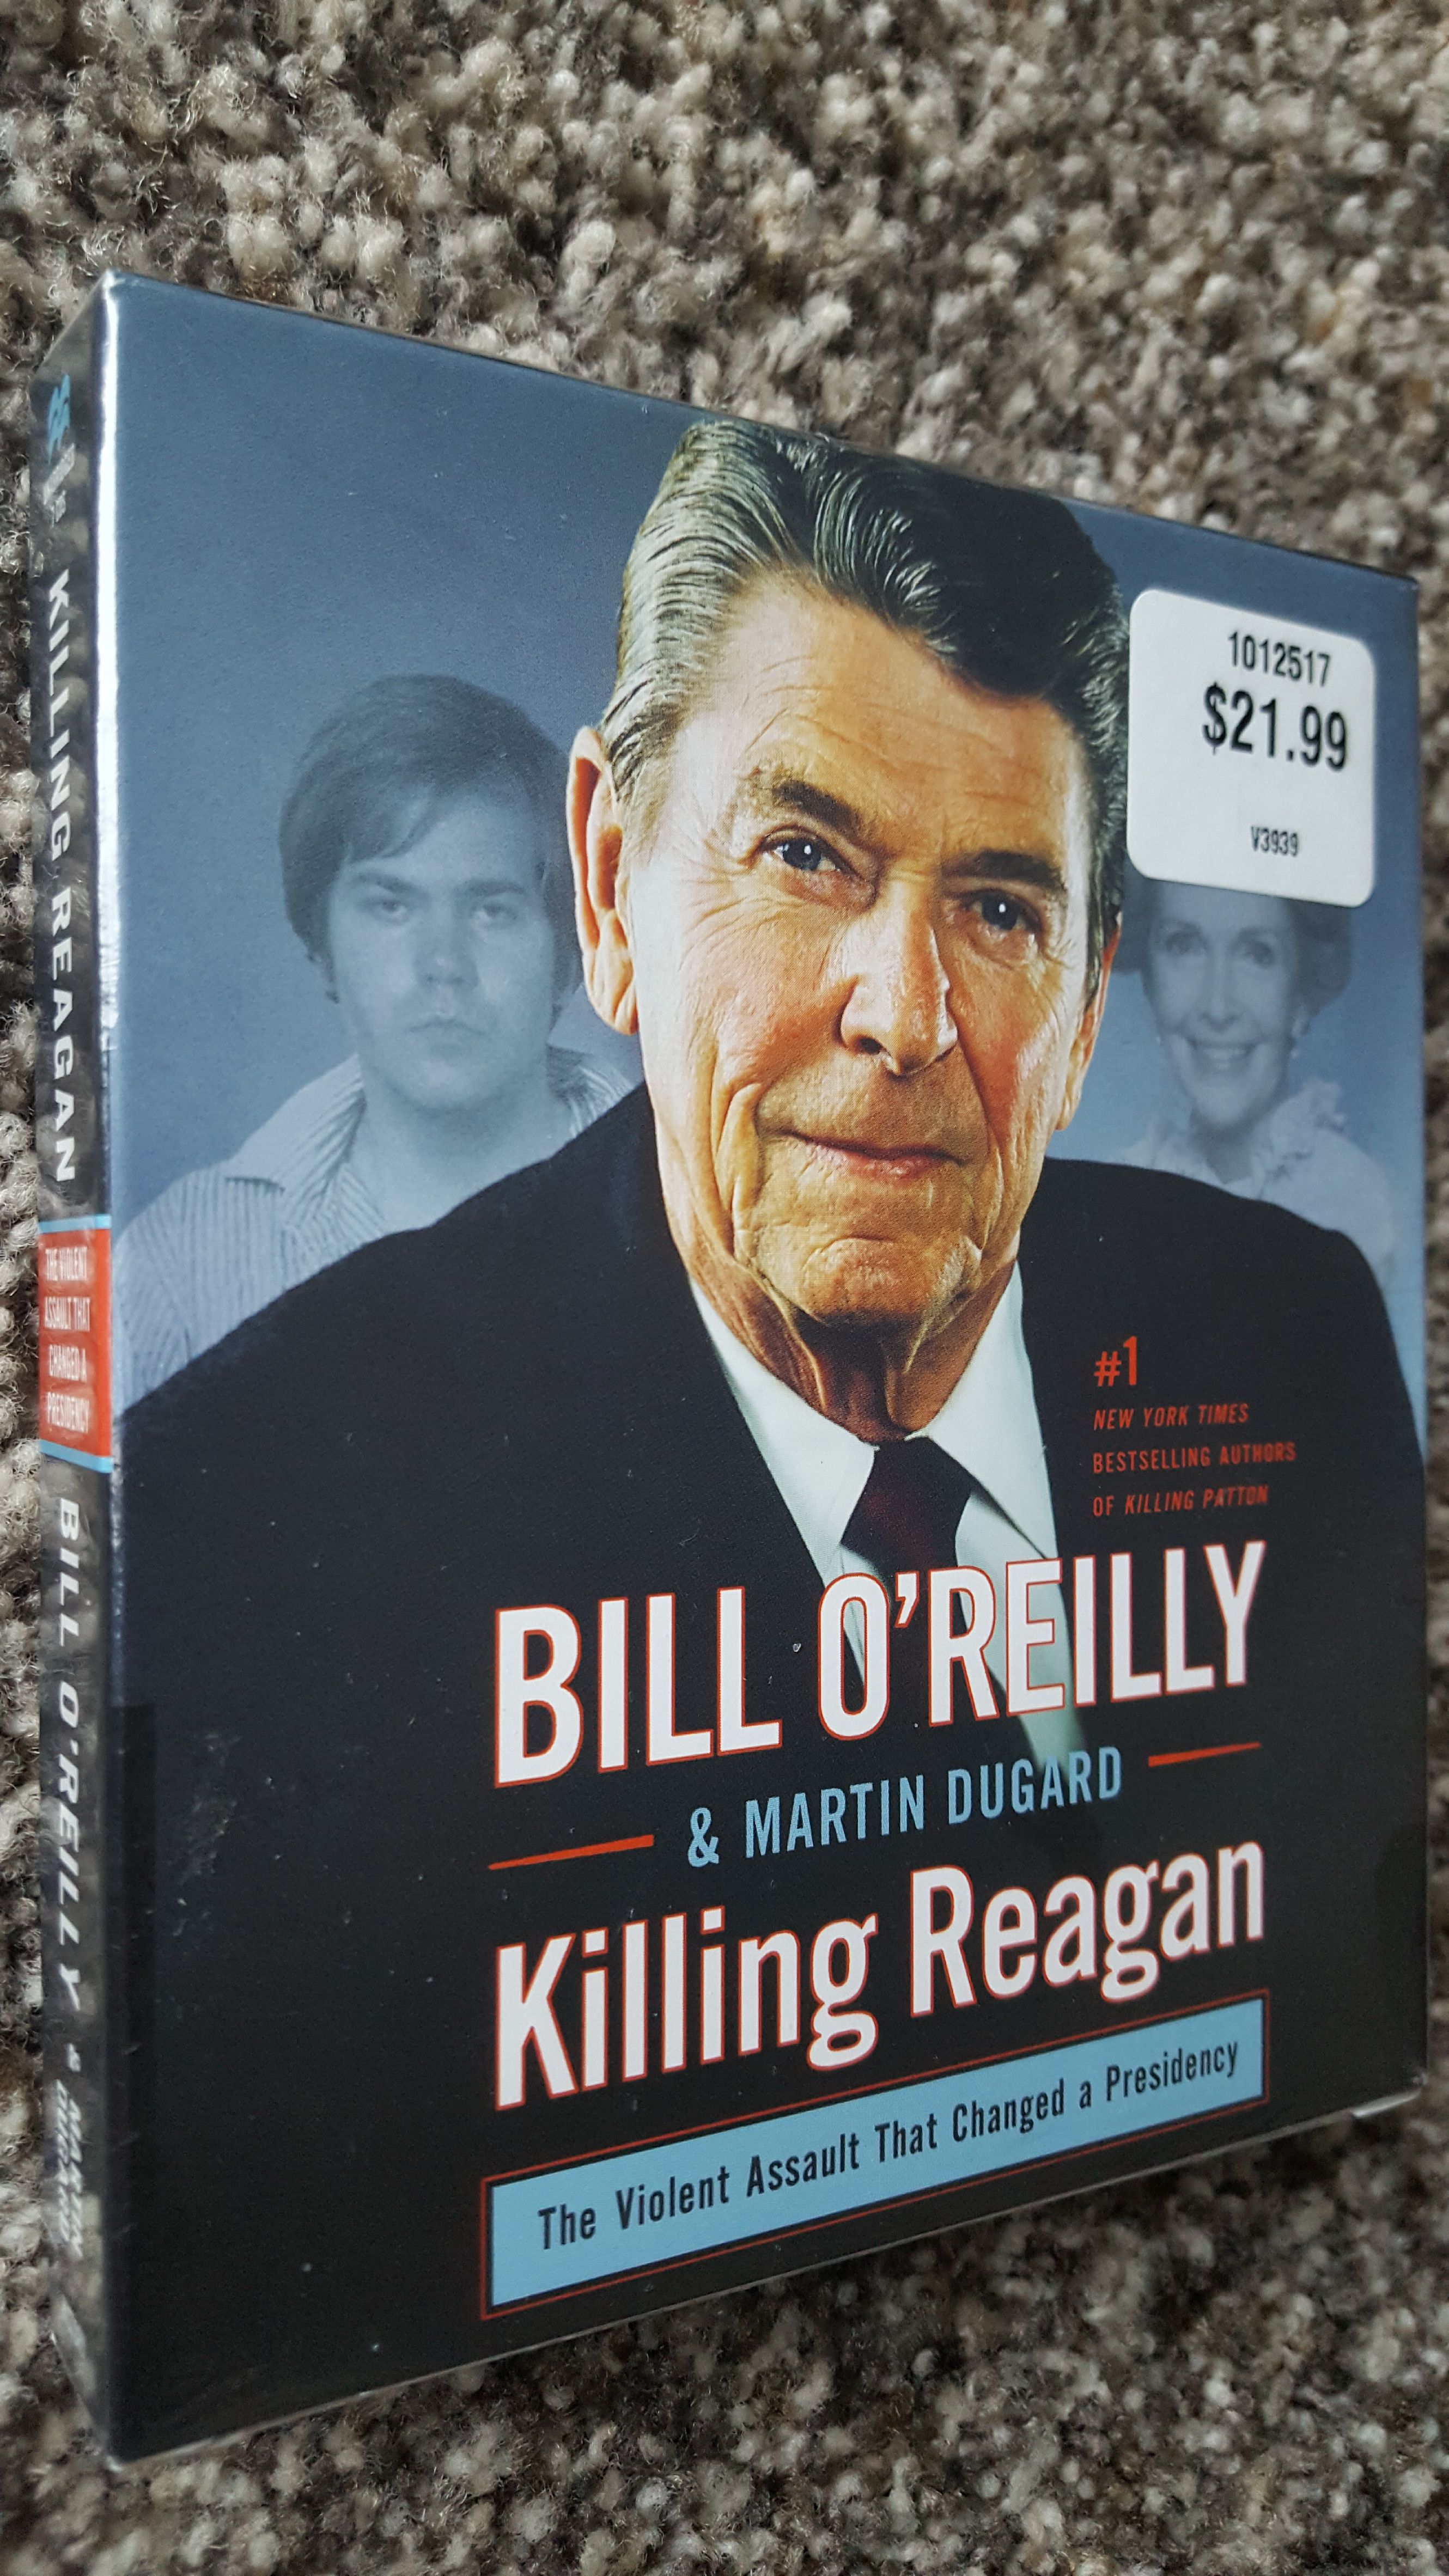 Killing Reagan by Bill O'Reilly *NEW* Martin Dugard *NEW SEALED* Audio Book